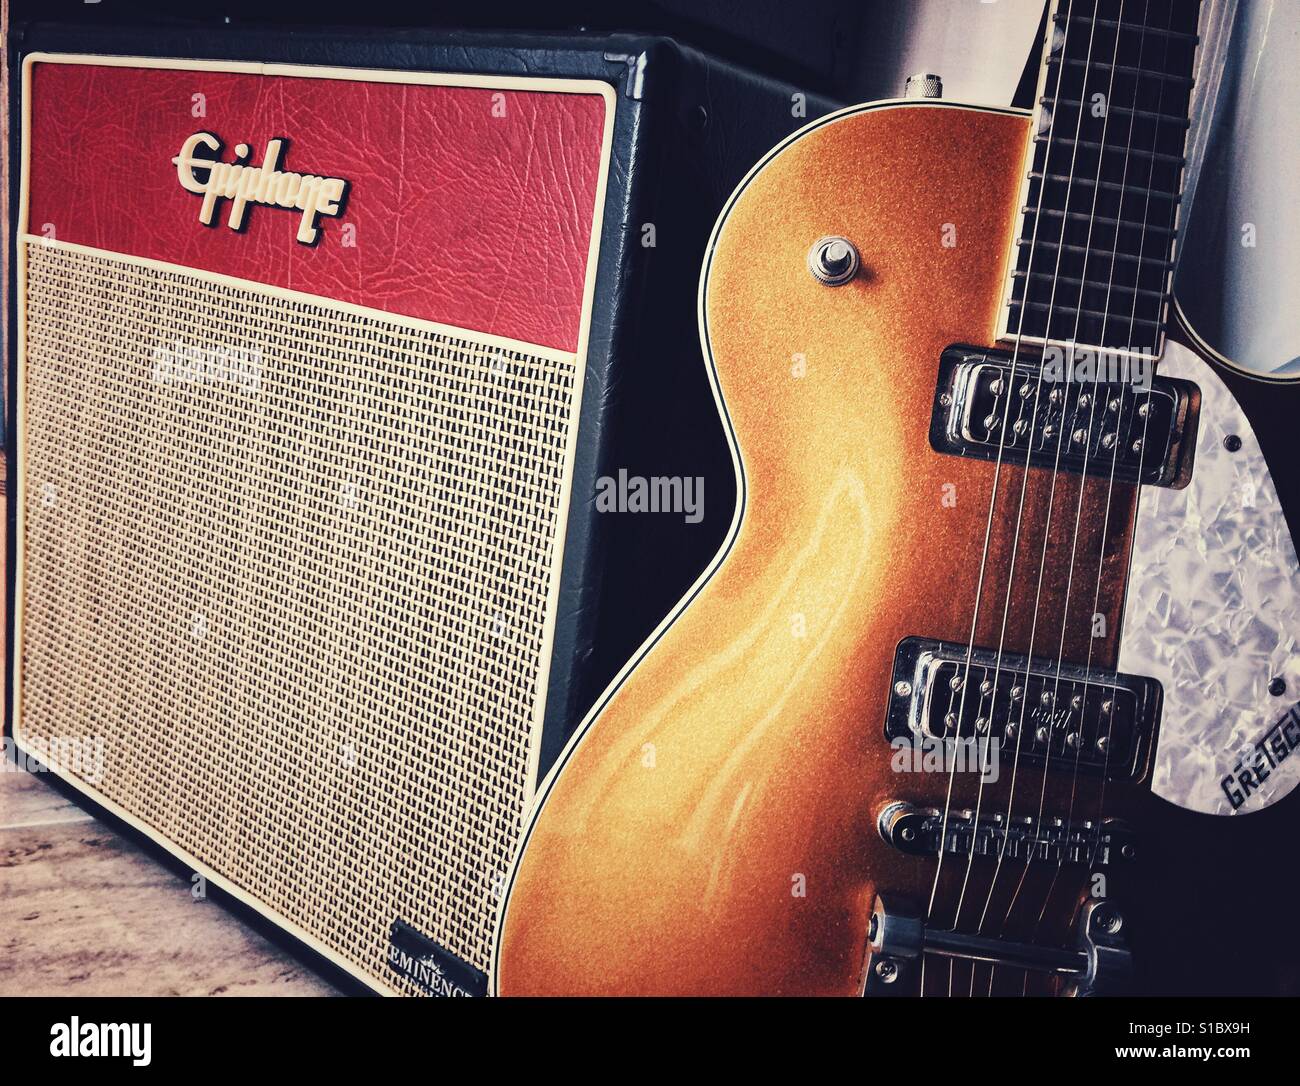 Gretsch guitare et amplificateur Epiphone Photo Stock - Alamy